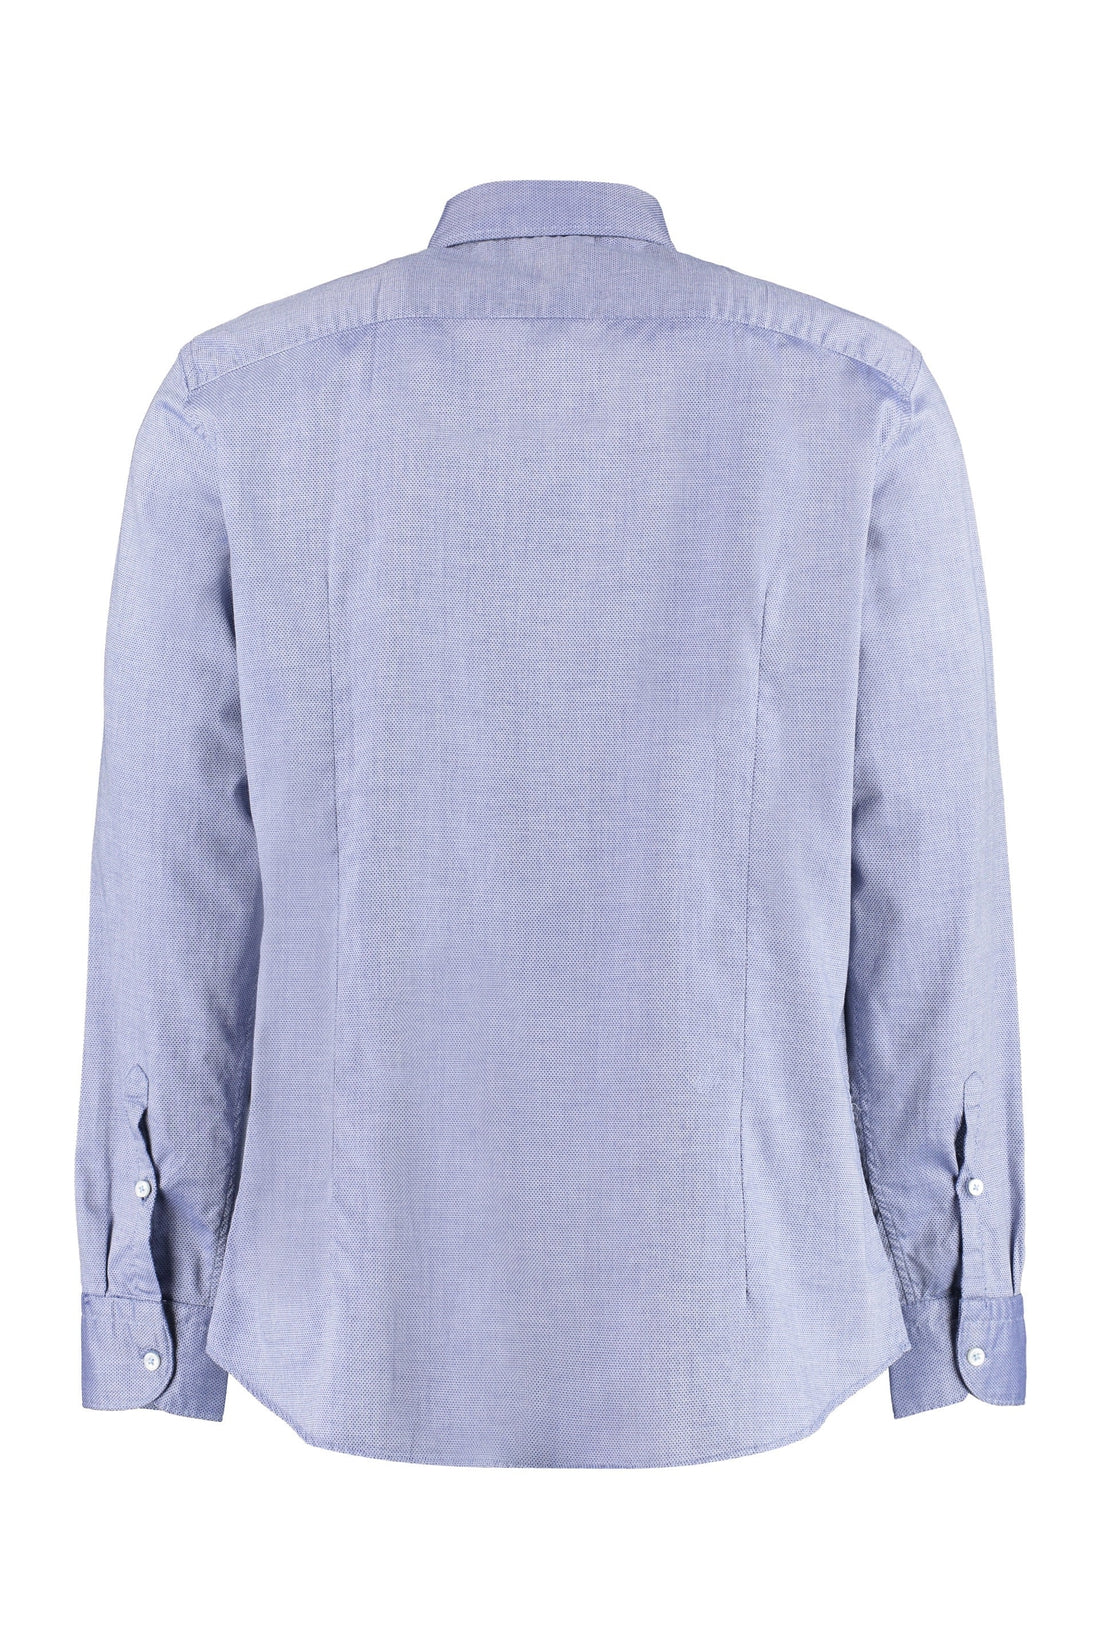 Piralo-OUTLET-SALE-Long sleeve stretch cotton shirt-ARCHIVIST